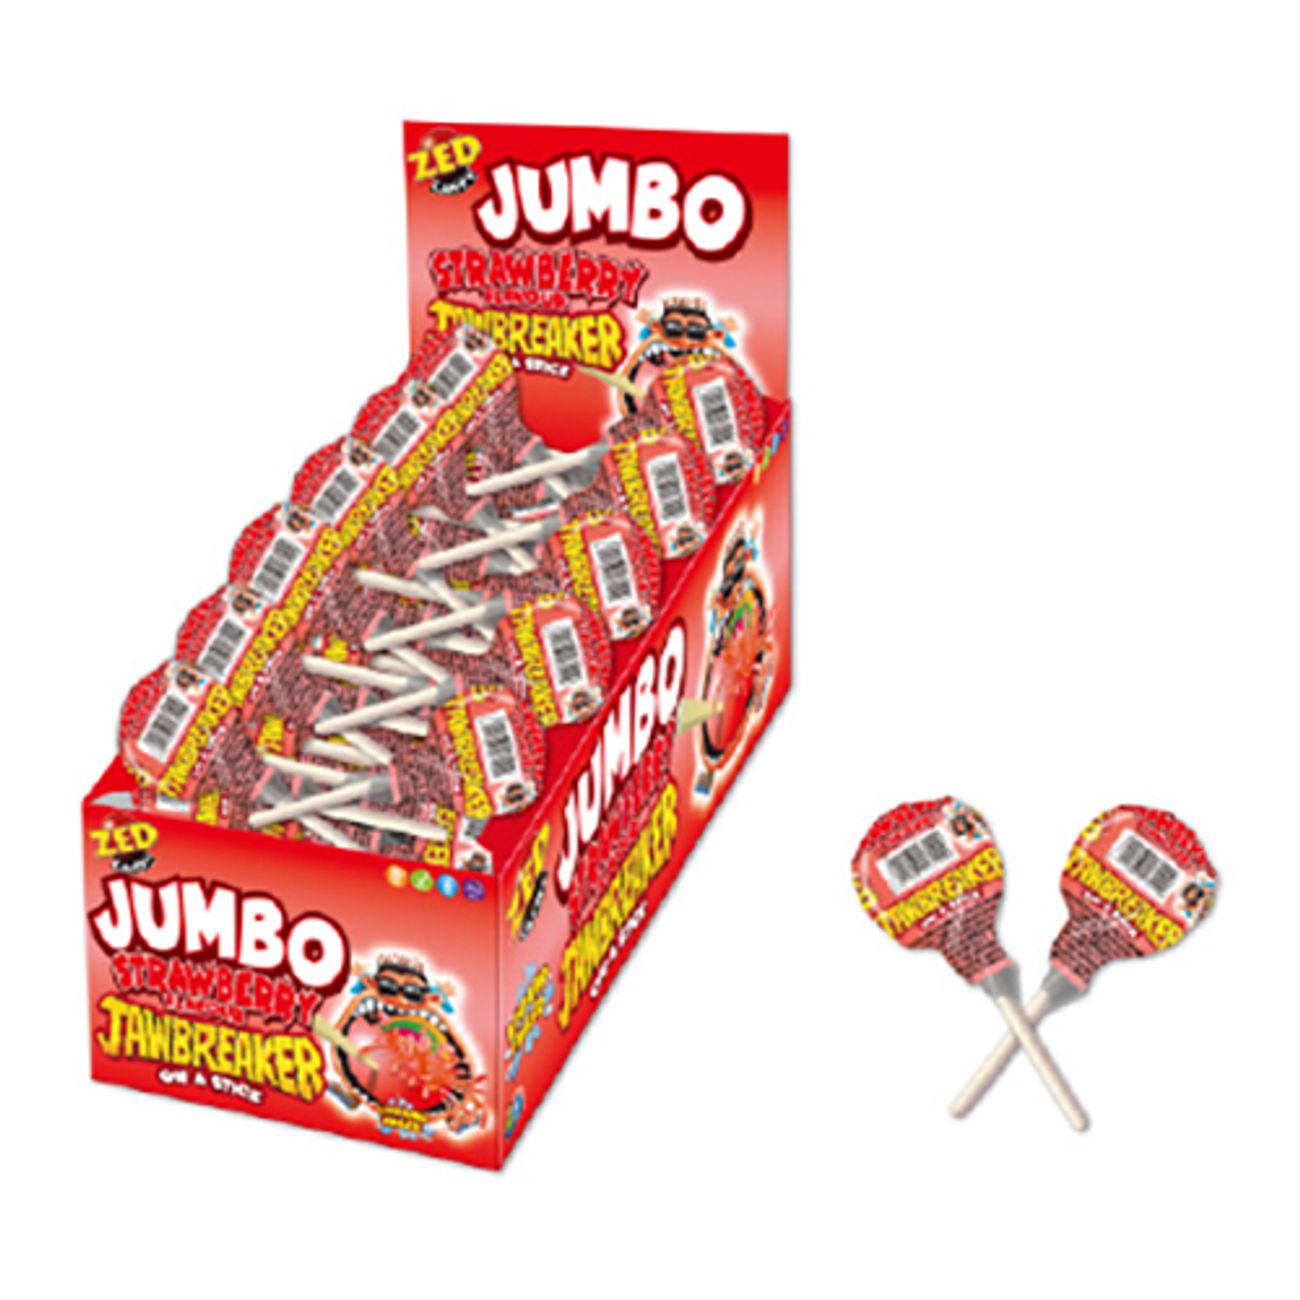 jumbo-jawbreaker-jordgubb-godisklubba-74408-1